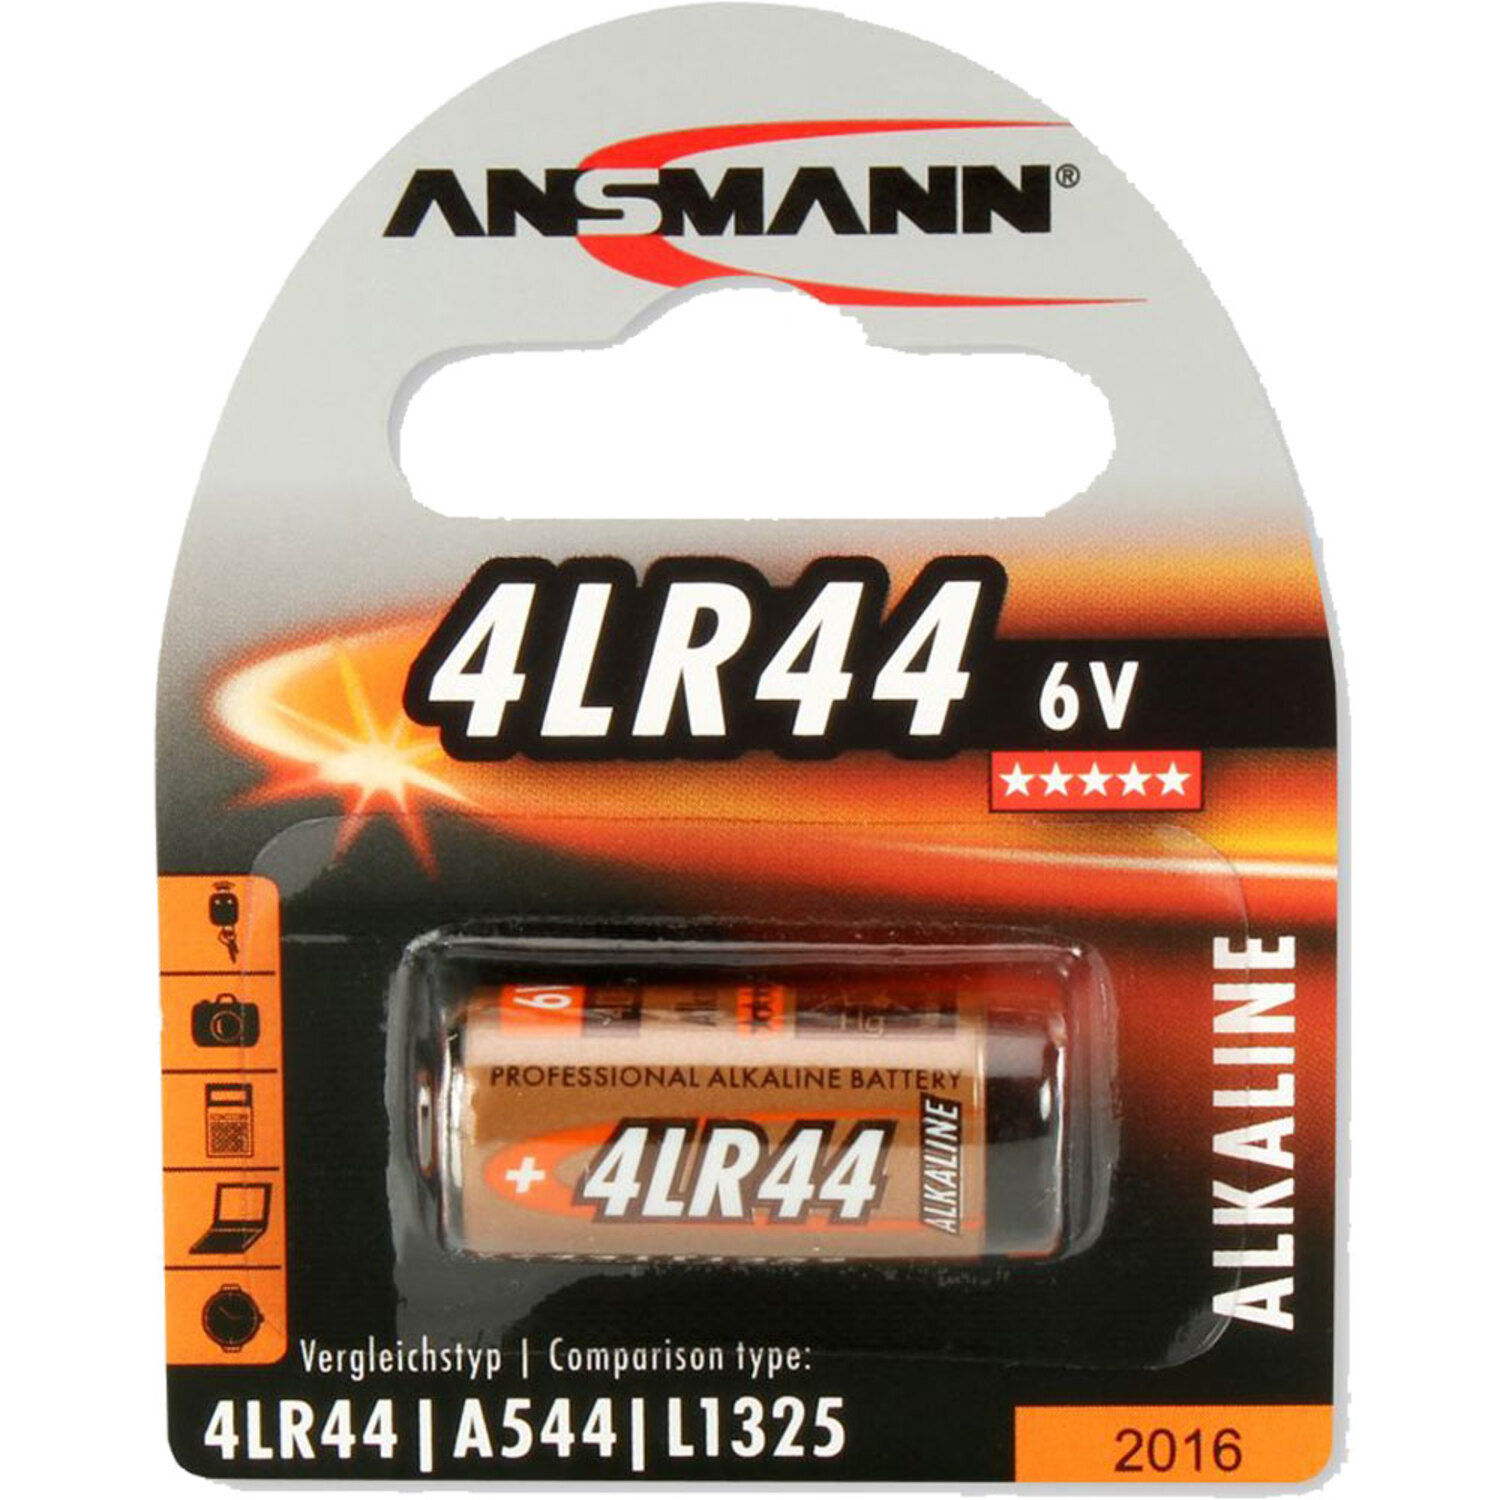 Stück / Batterie Alkaline ANSMANN 1 Alkaline, 1510-0009 Licht ANSMANN / Batterien Energie Volt Strom Batterien, 6 4LR44 6V